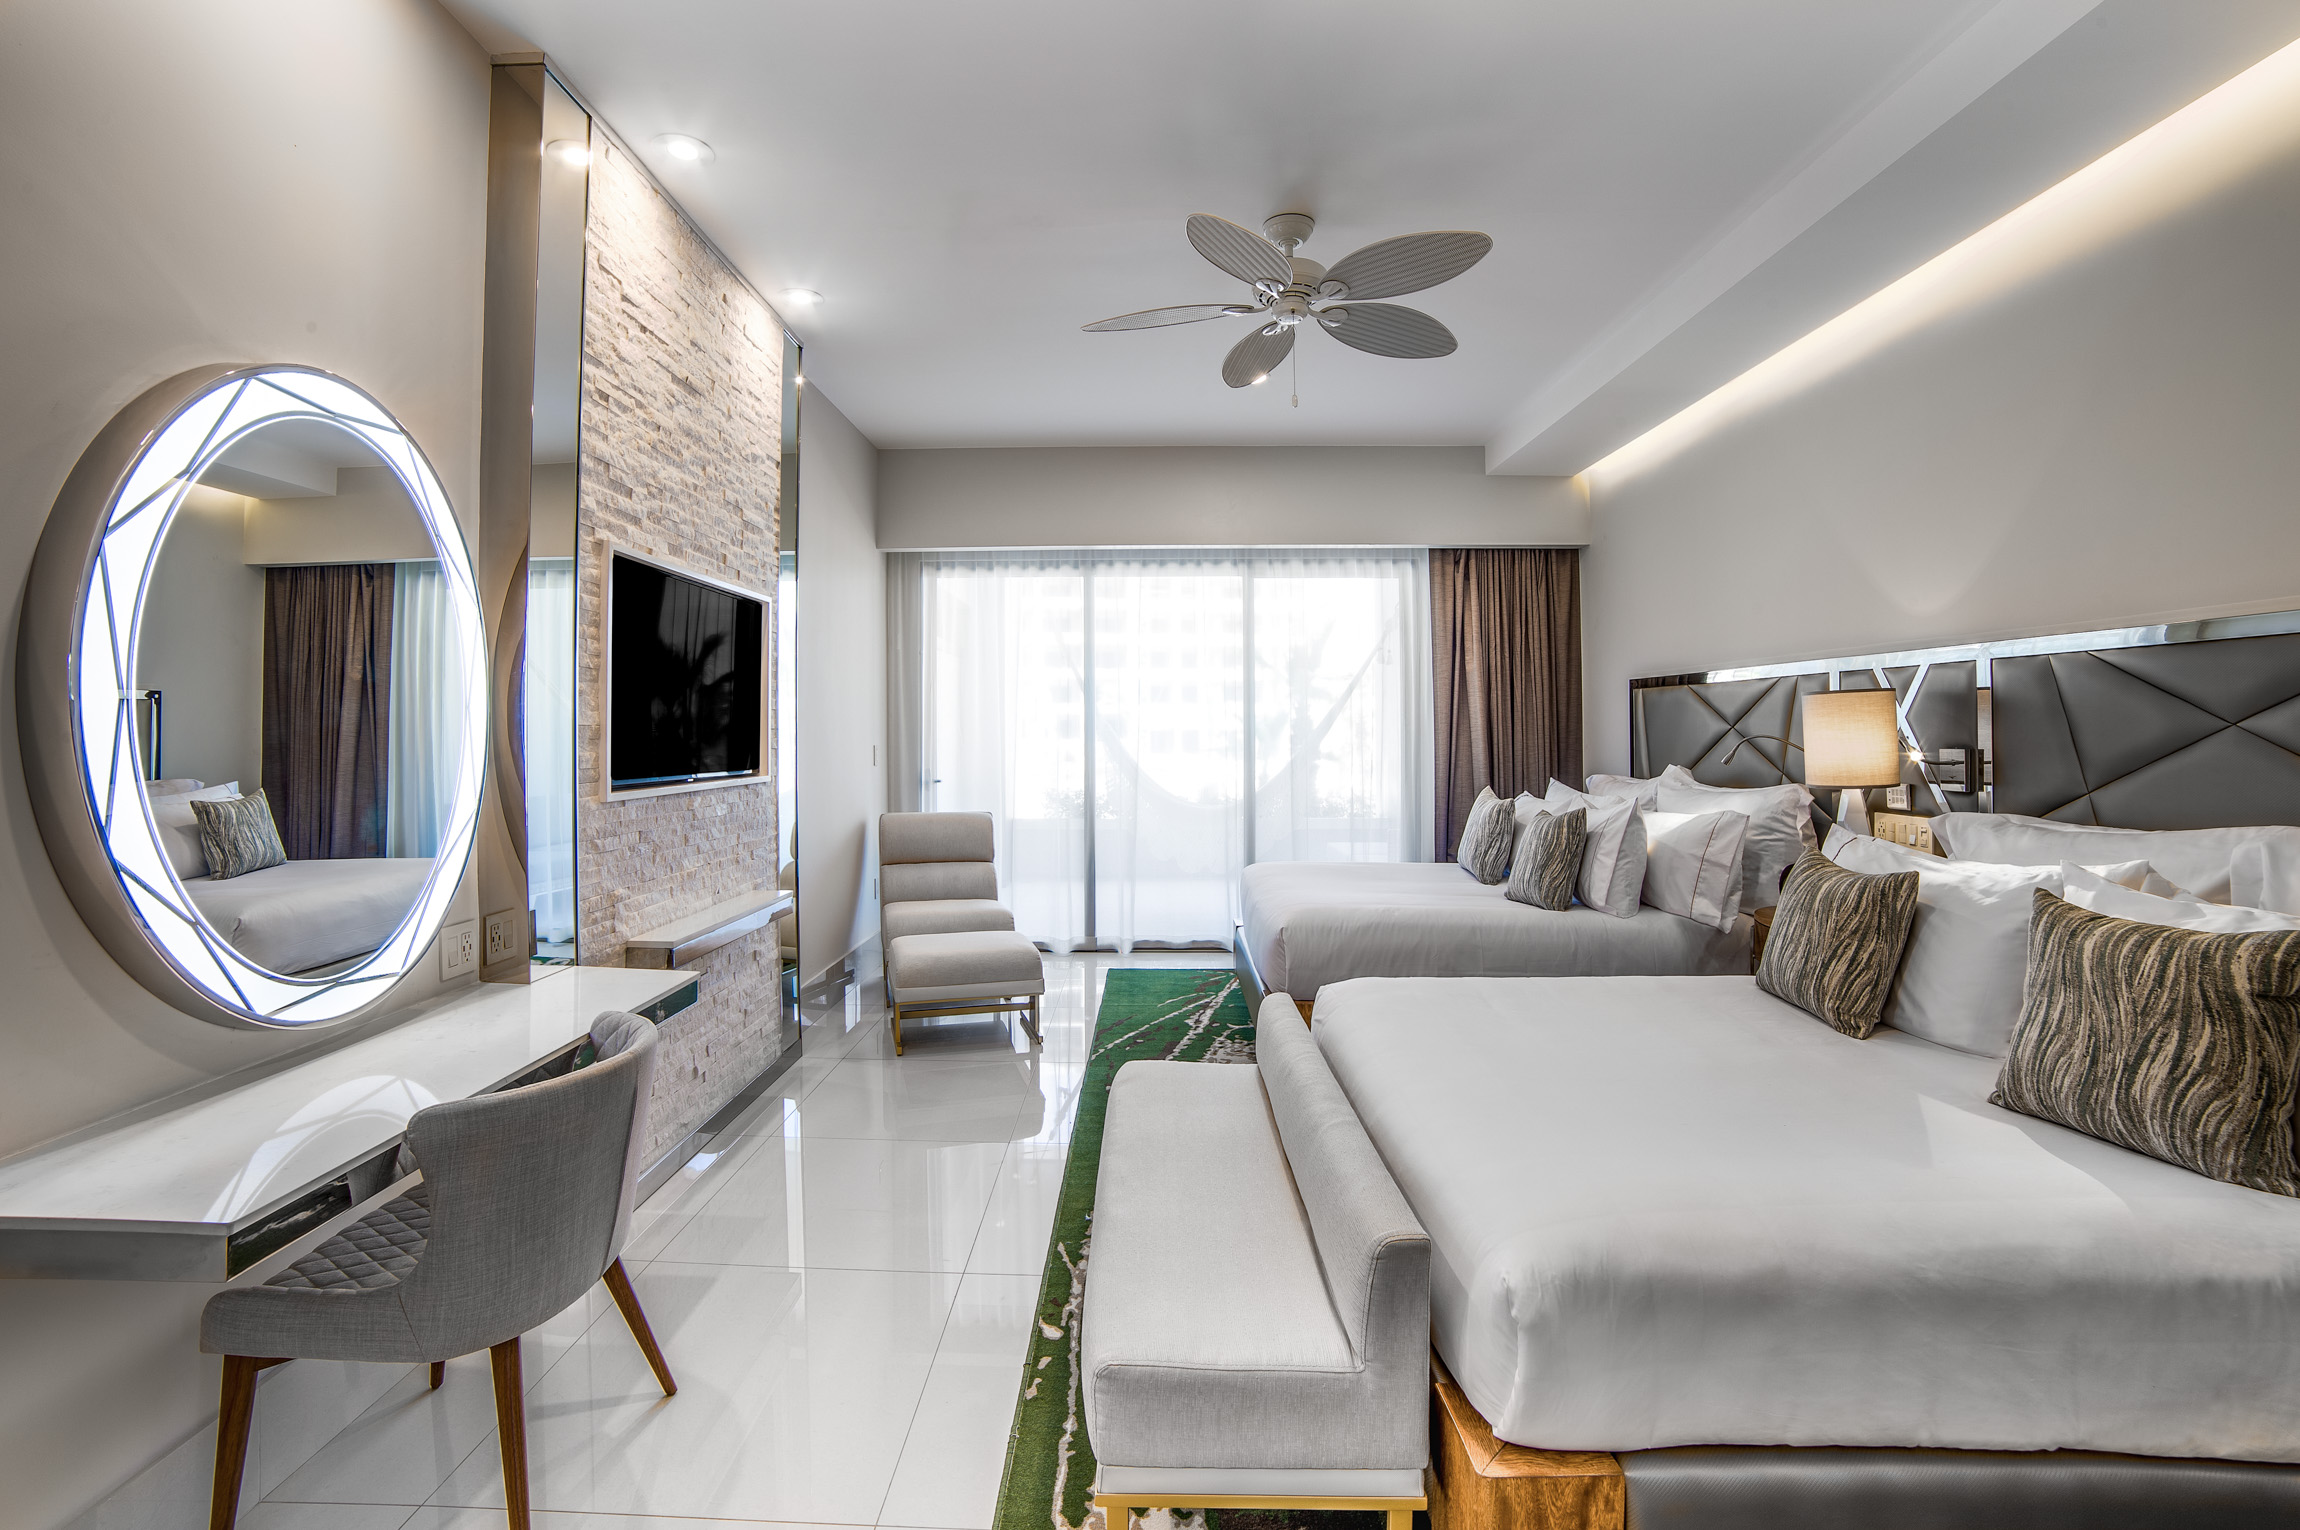 Two bedroom suite. Radisson Resort & Suites 5* two Bedroom Suite with Terrace туалет. Garza Blanca Resort & Spa Cancun.